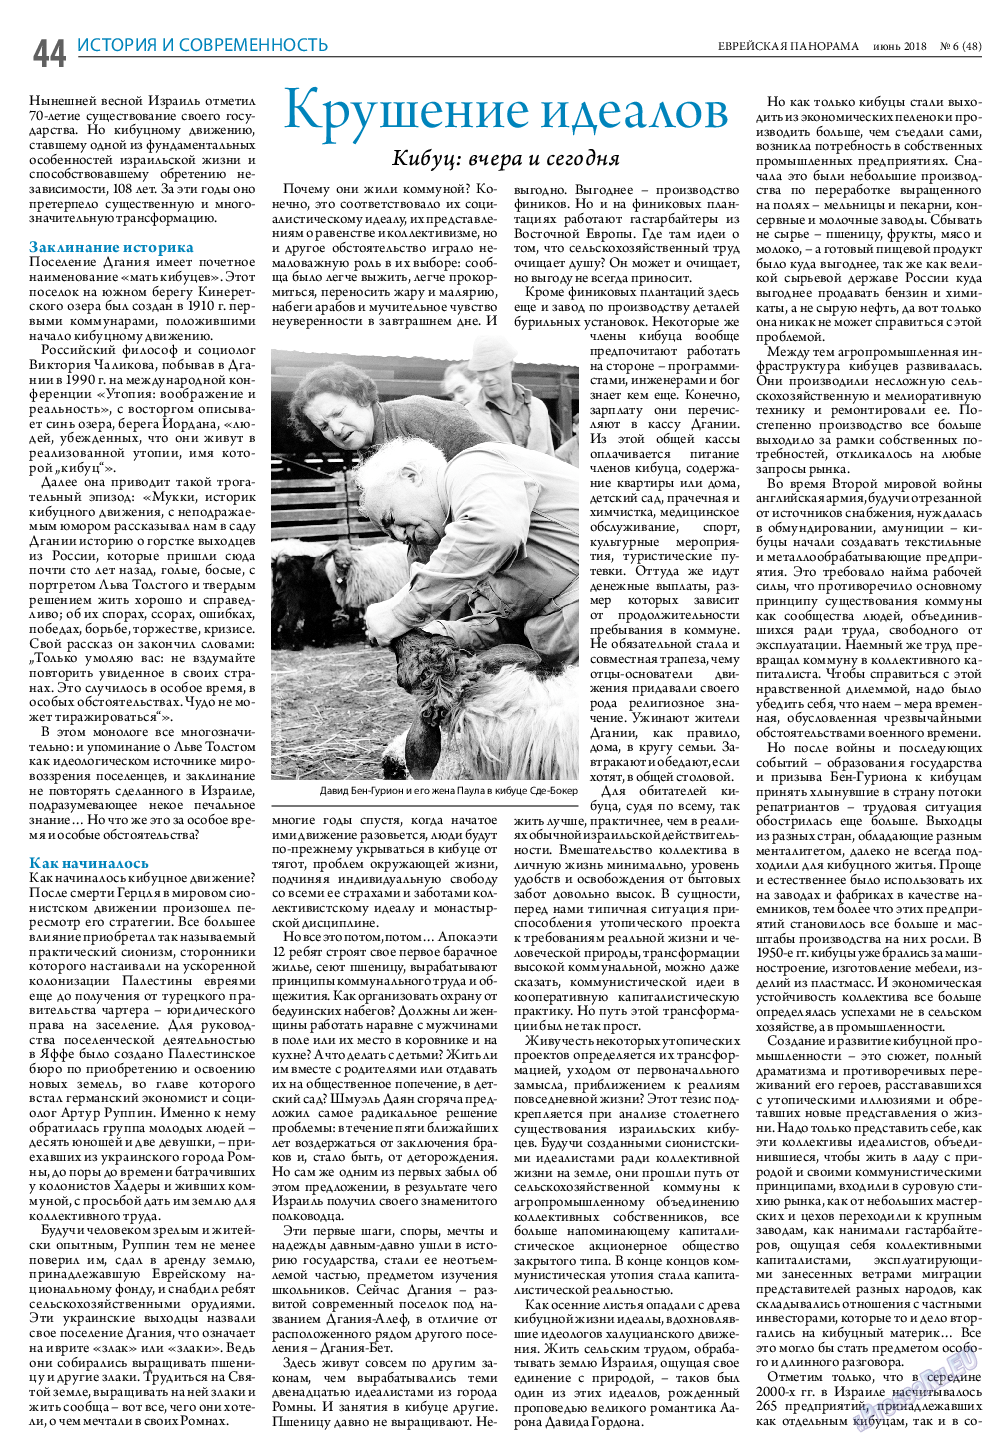 Еврейская панорама, газета. 2018 №6 стр.44